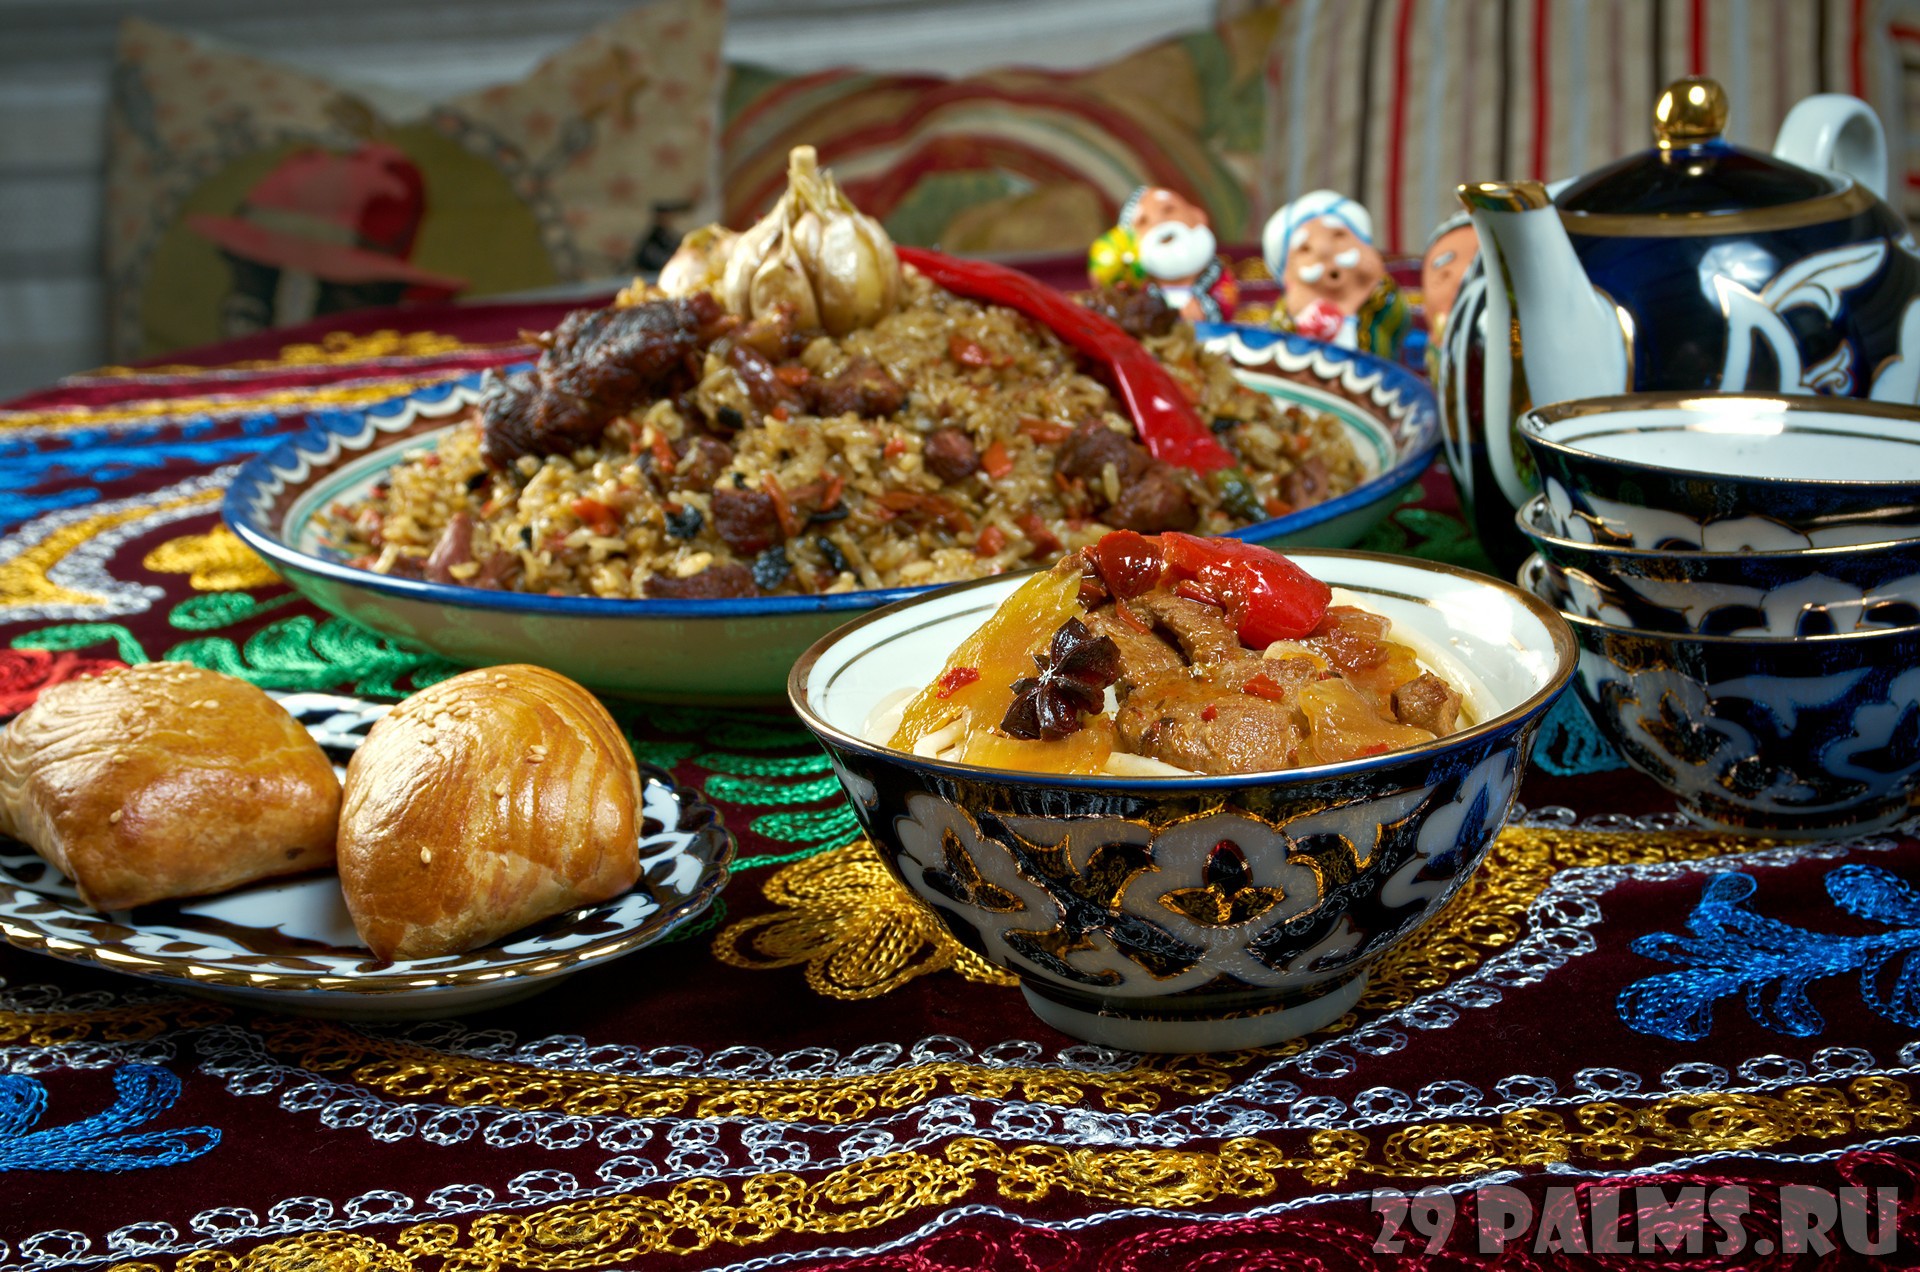 food set  Central Asian cuisine - plov, lagman,sherbet  and samsa